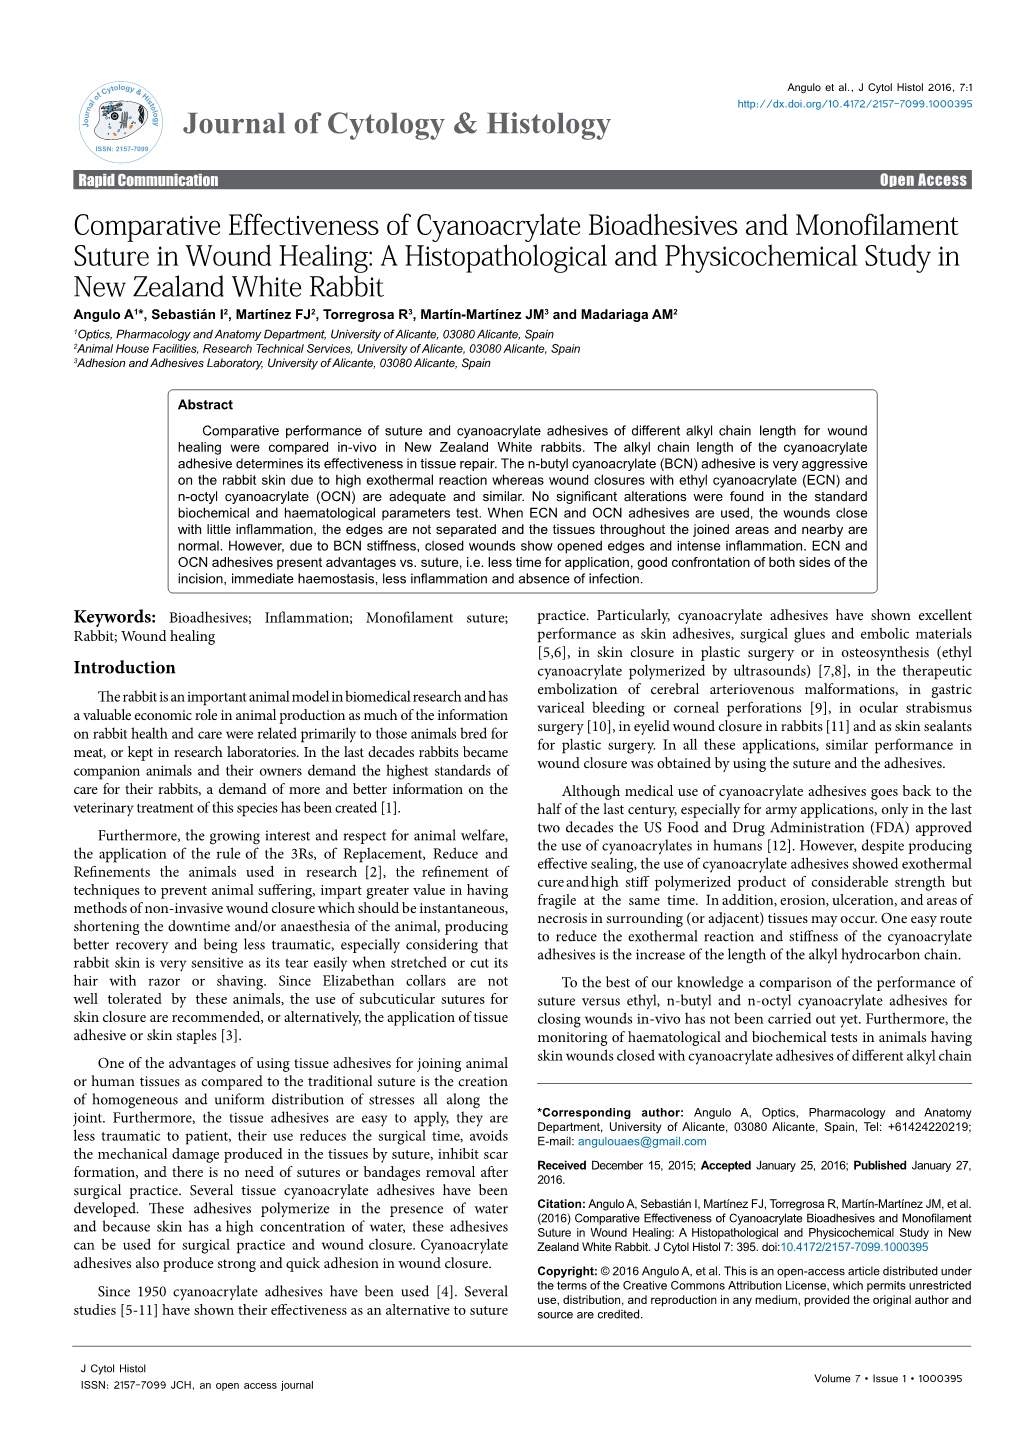 Comparative Effectiveness of Cyanoacrylate Bioadhesives